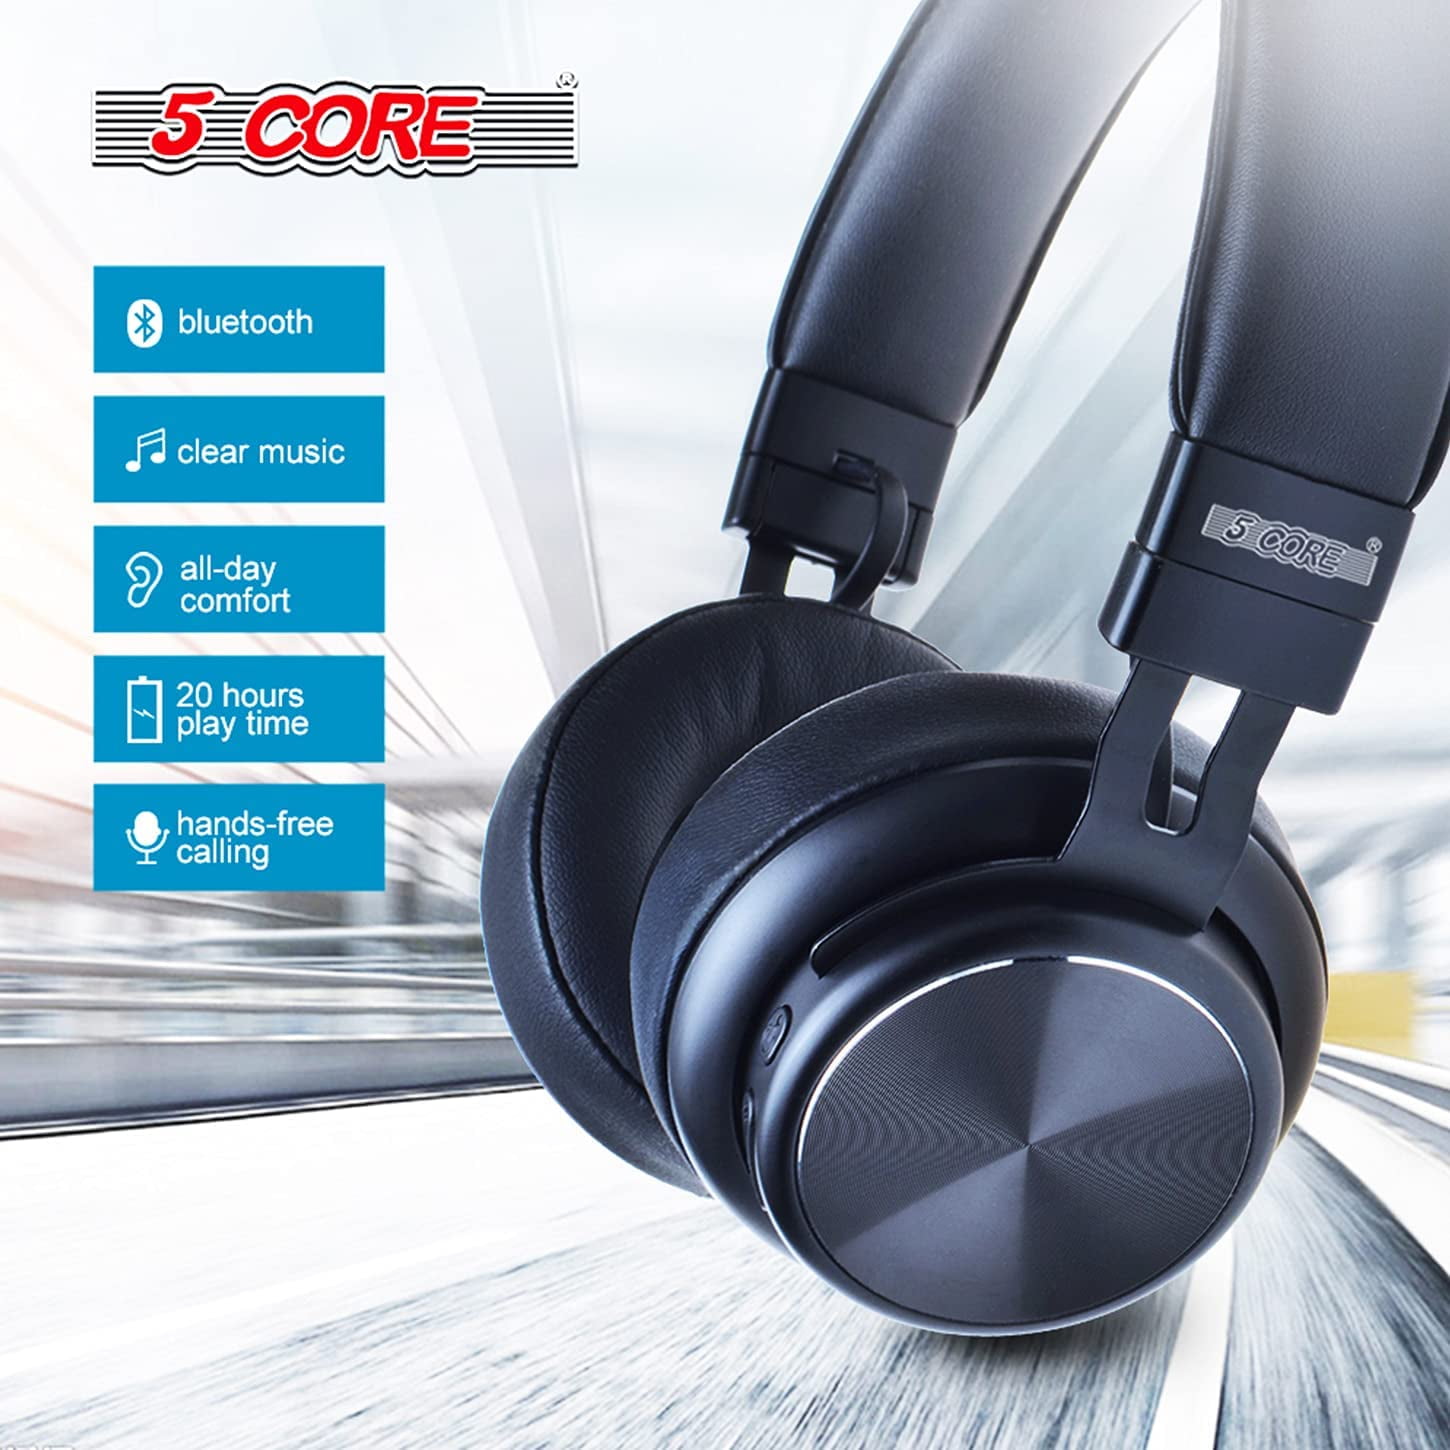 5 Core Premium Bluetooth Wireless 5.0 USB Over-Ear Foldable